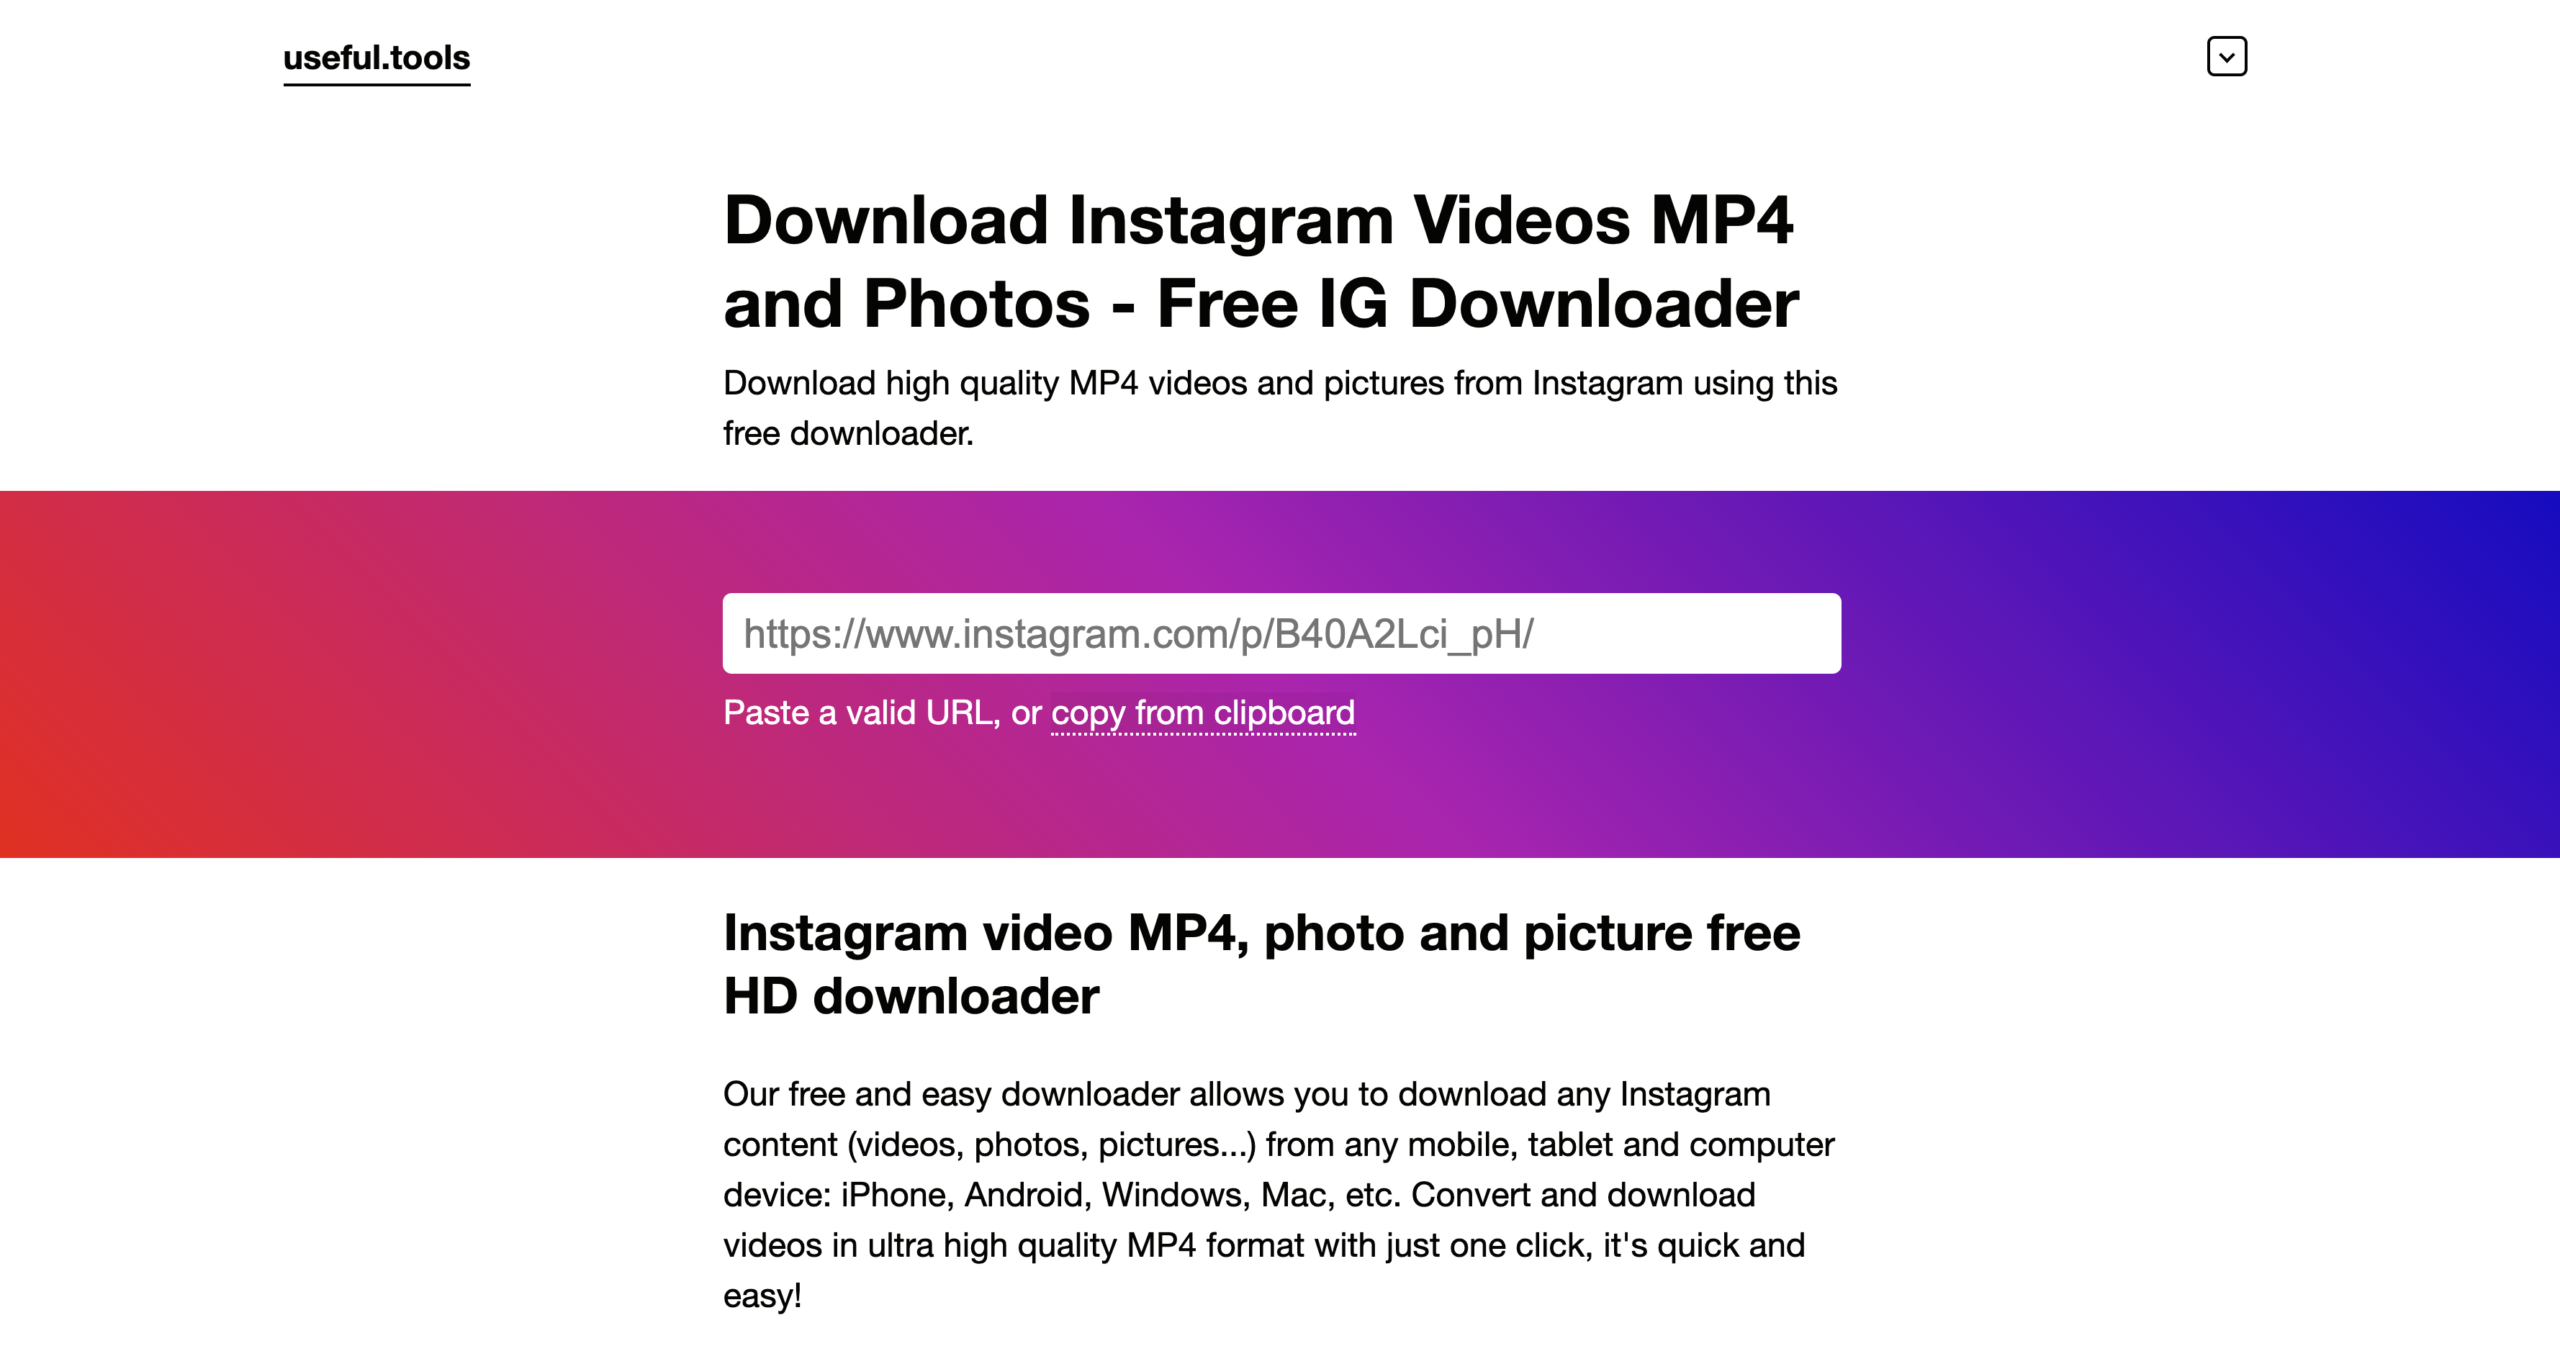 Download Instagram Videos using Useful.tools